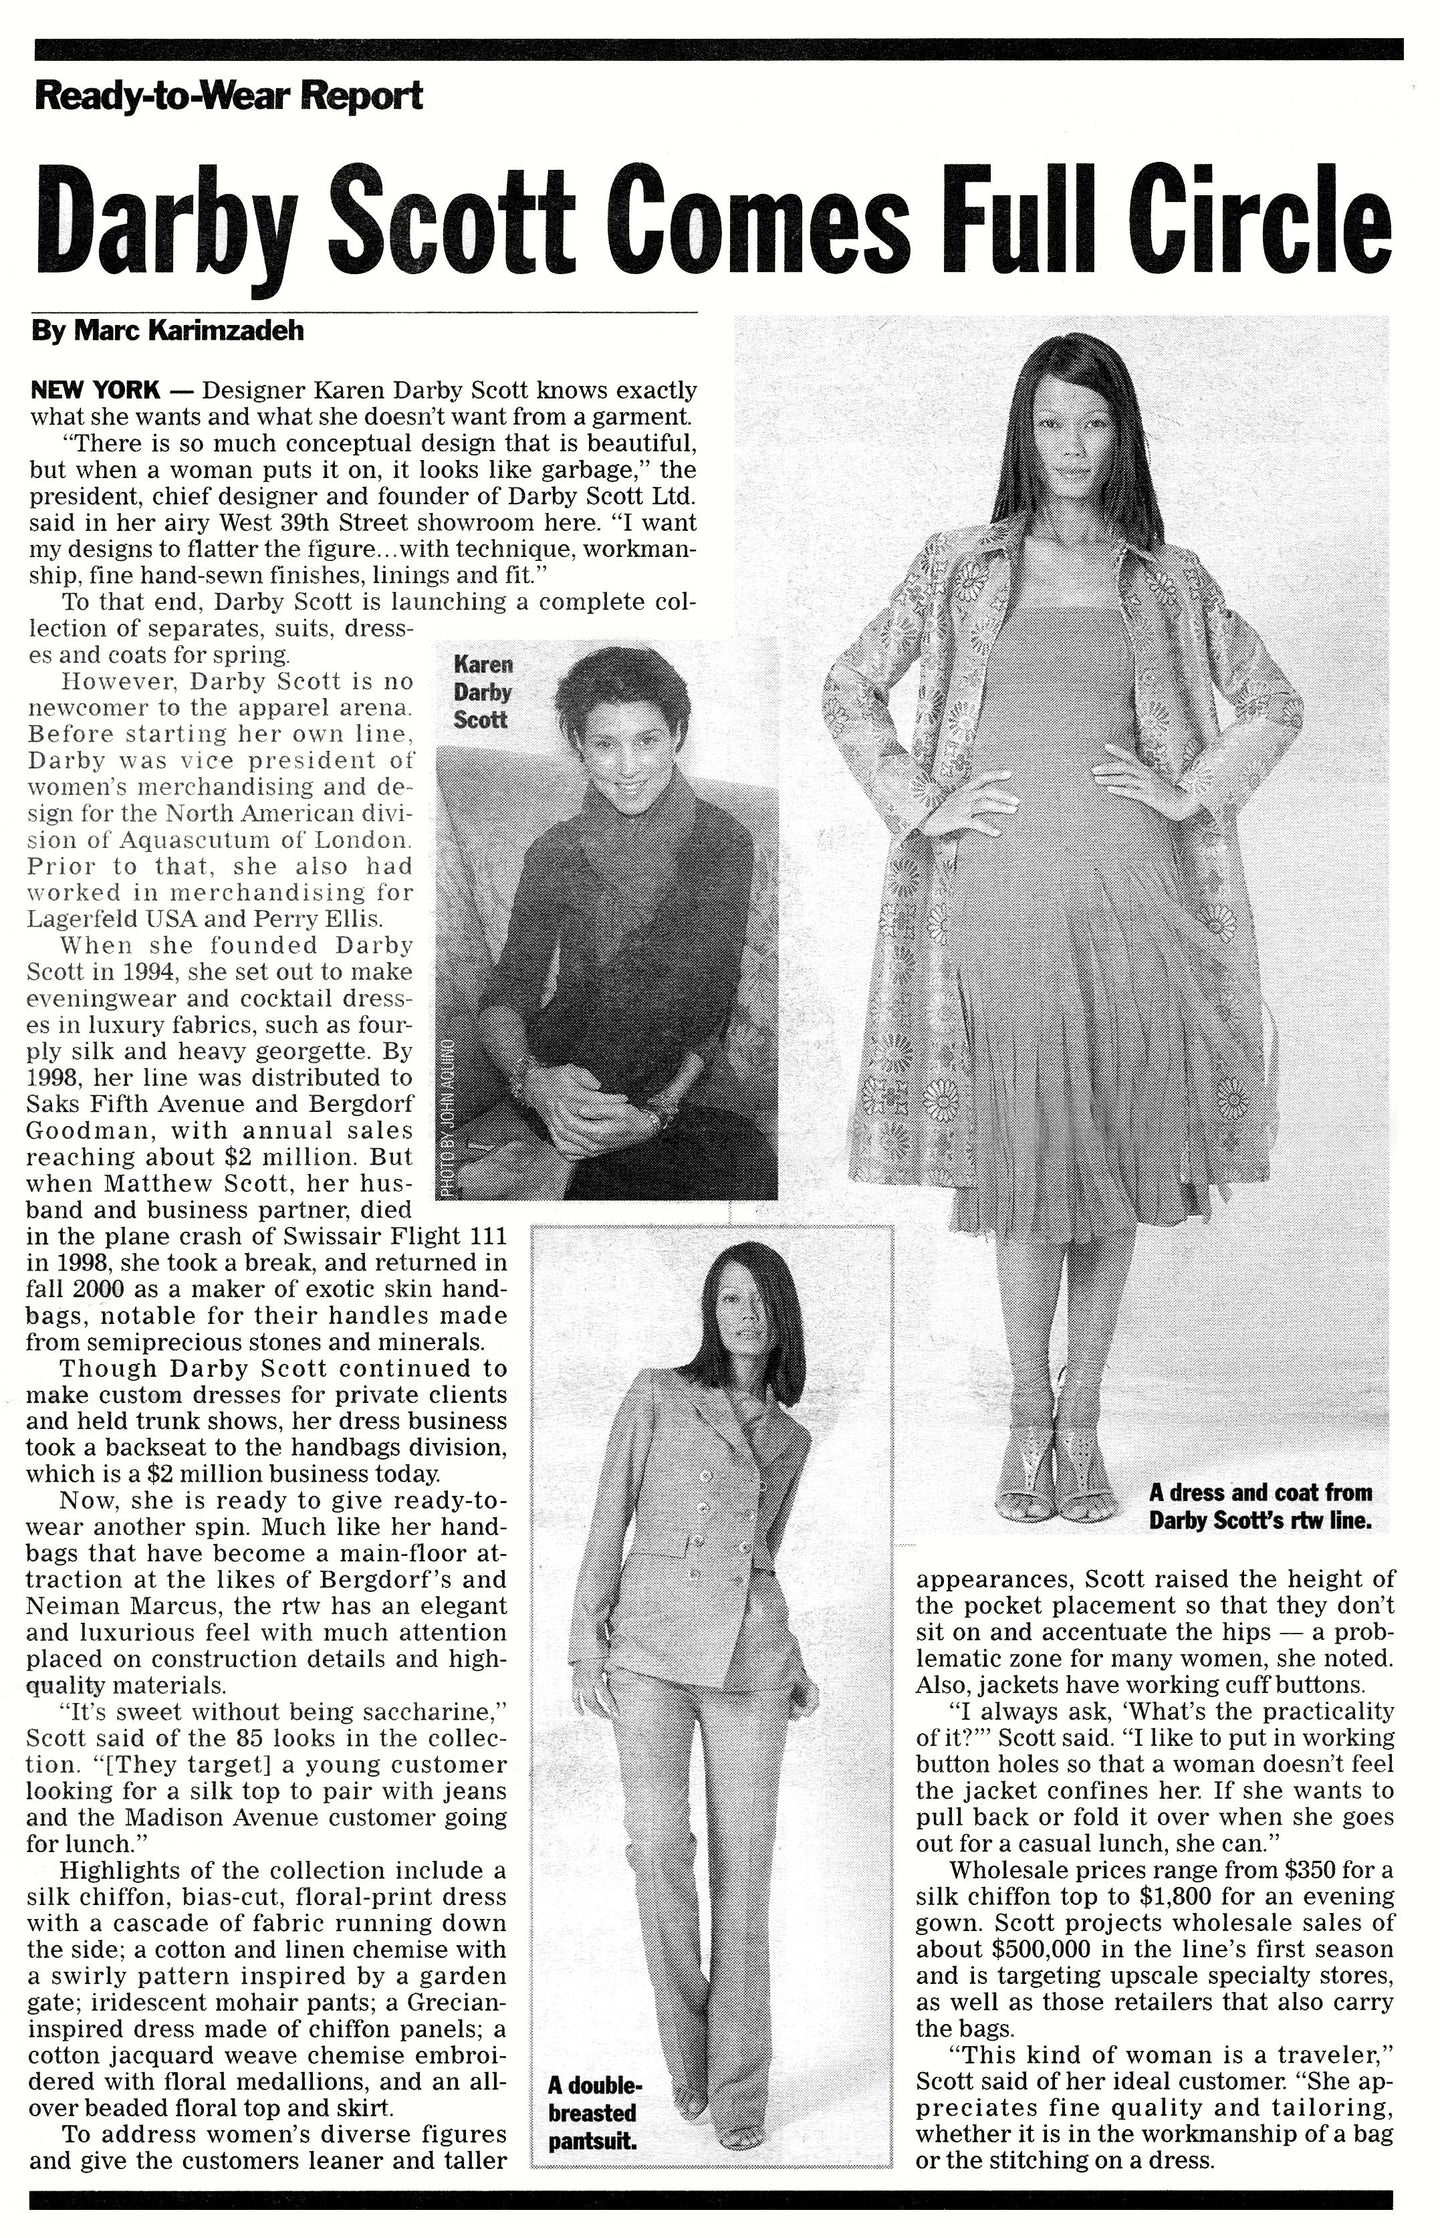 Women's Wear Daily article about designer Darby Scott